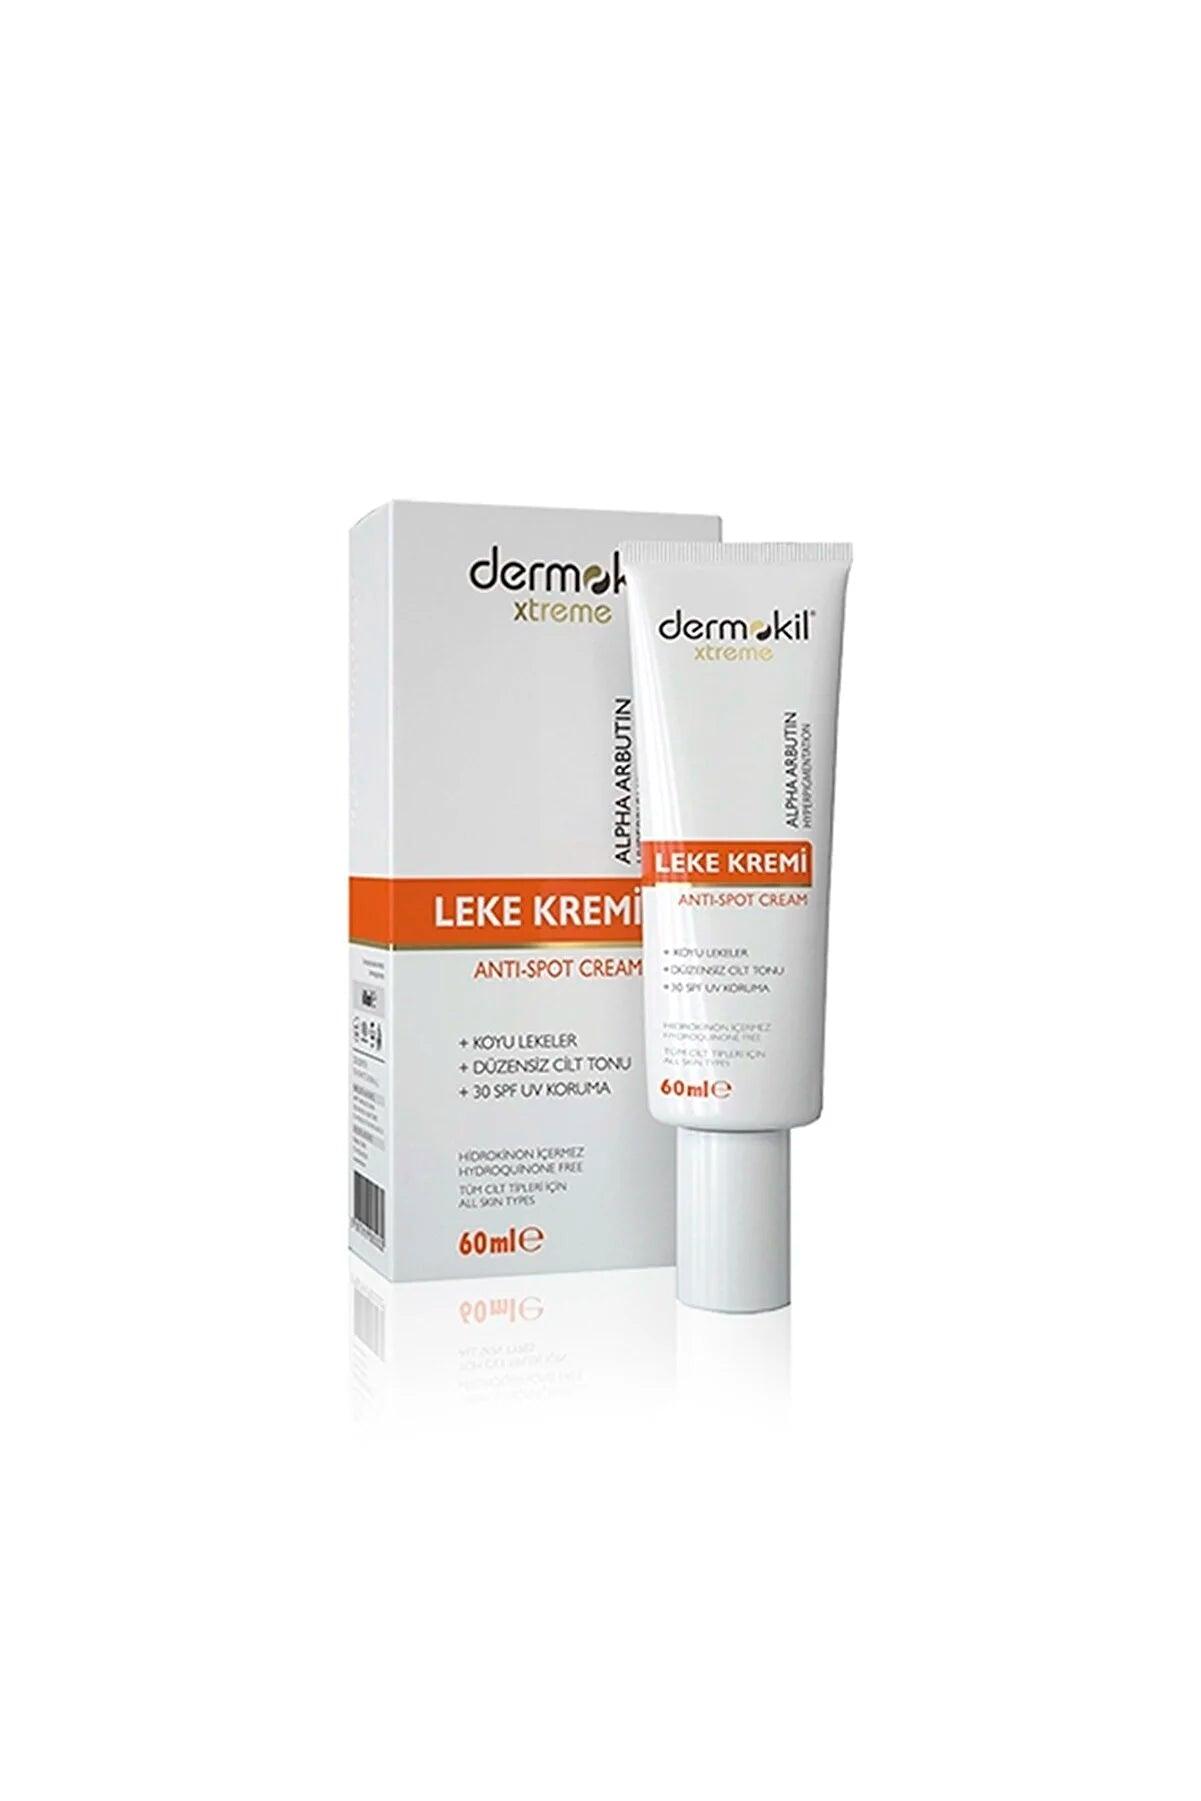 Dermokil Anti-spot Blemish Extreme Whitening Cream 60 ml - Mrayti Store